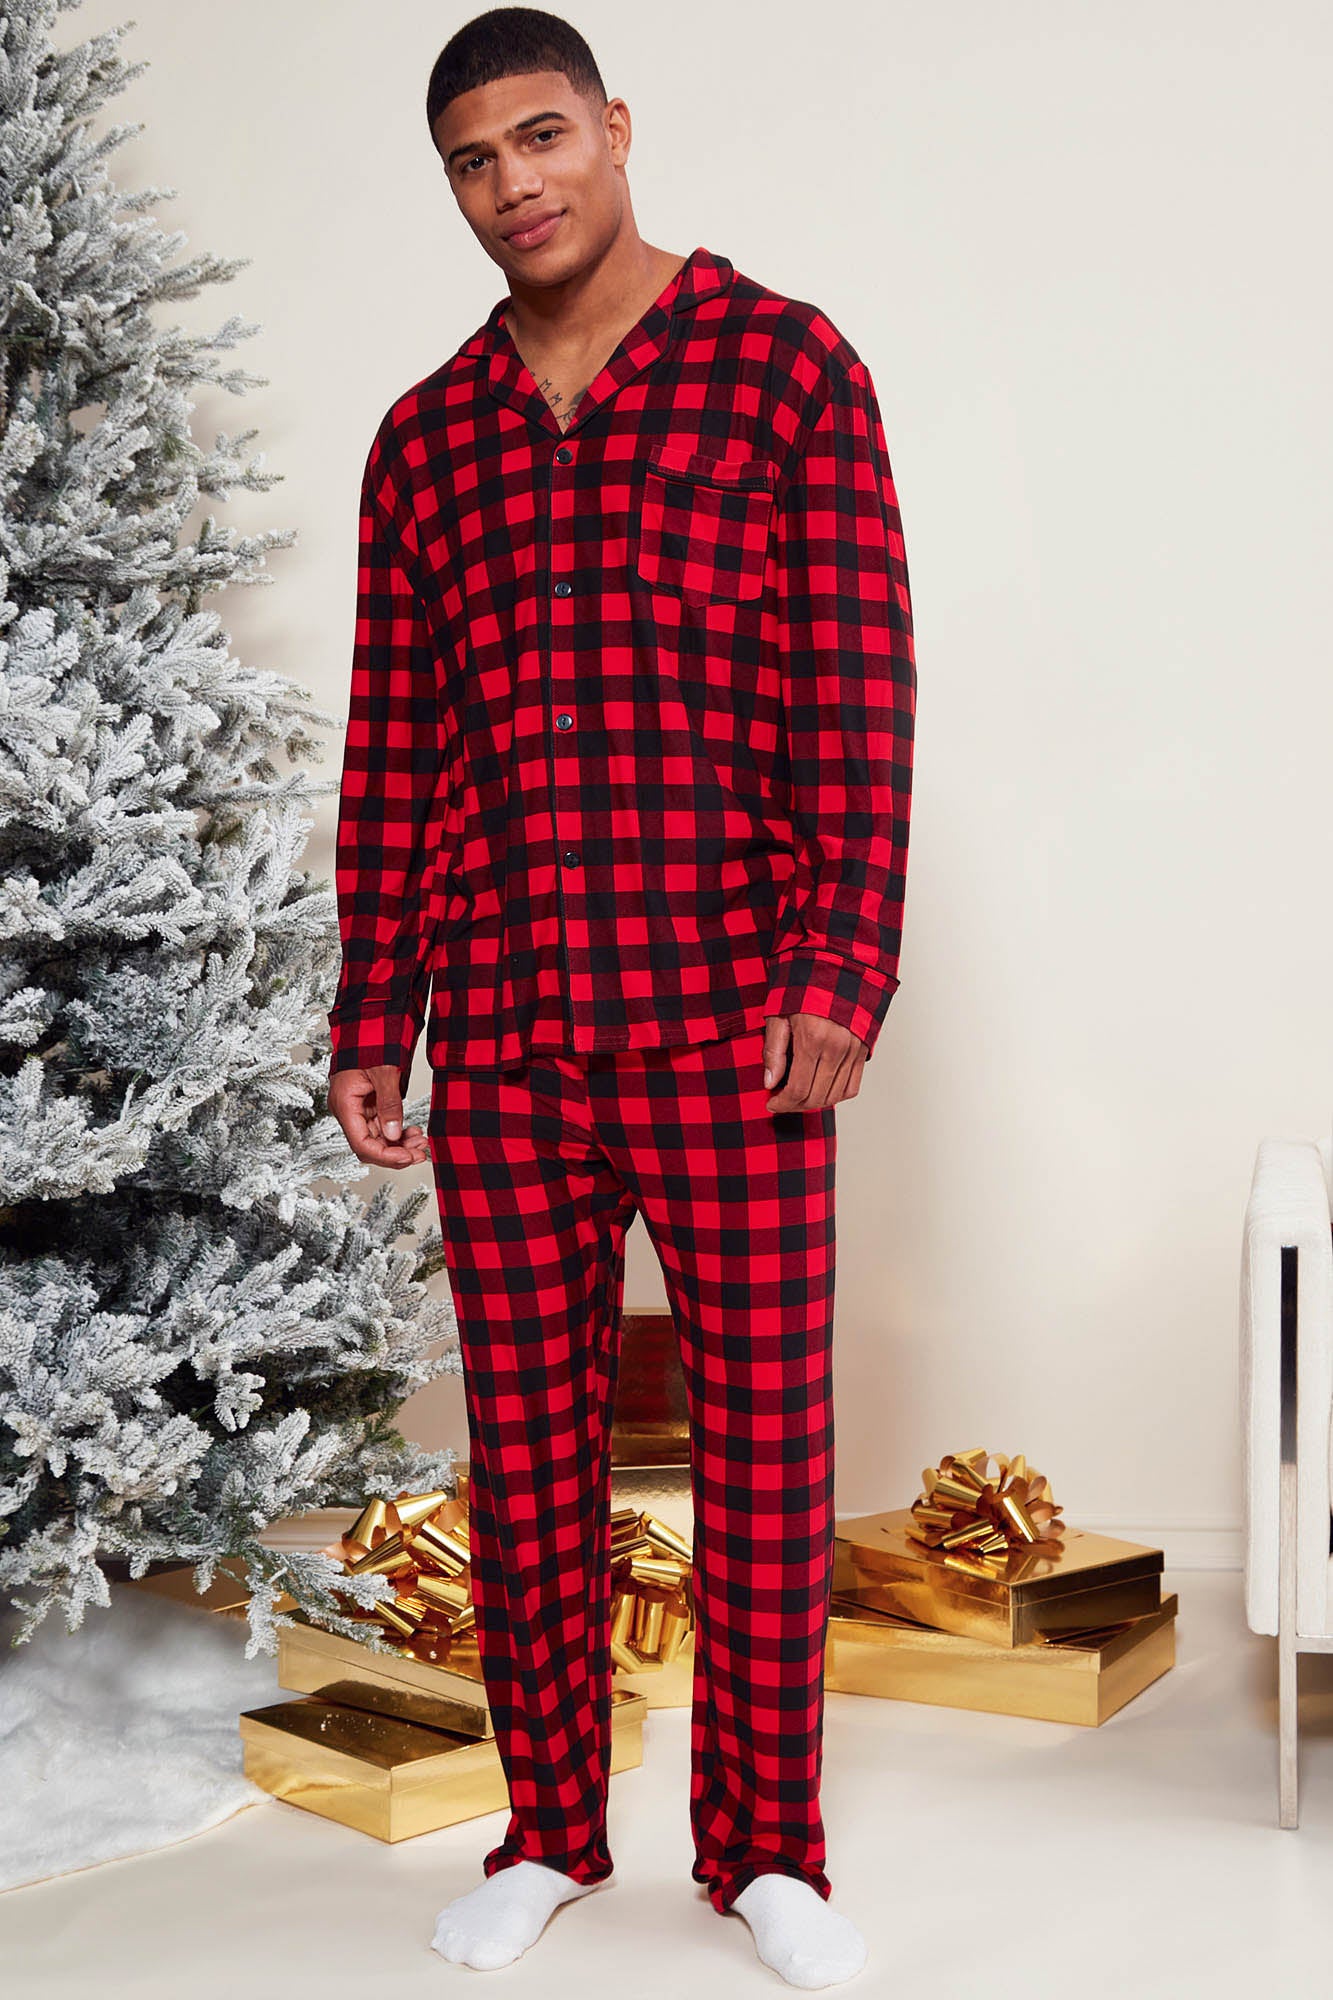 Warm And Cozy By The Fireplace Holiday PJ Set - Red/Black, Fashion Nova,  Mens Sleepwear